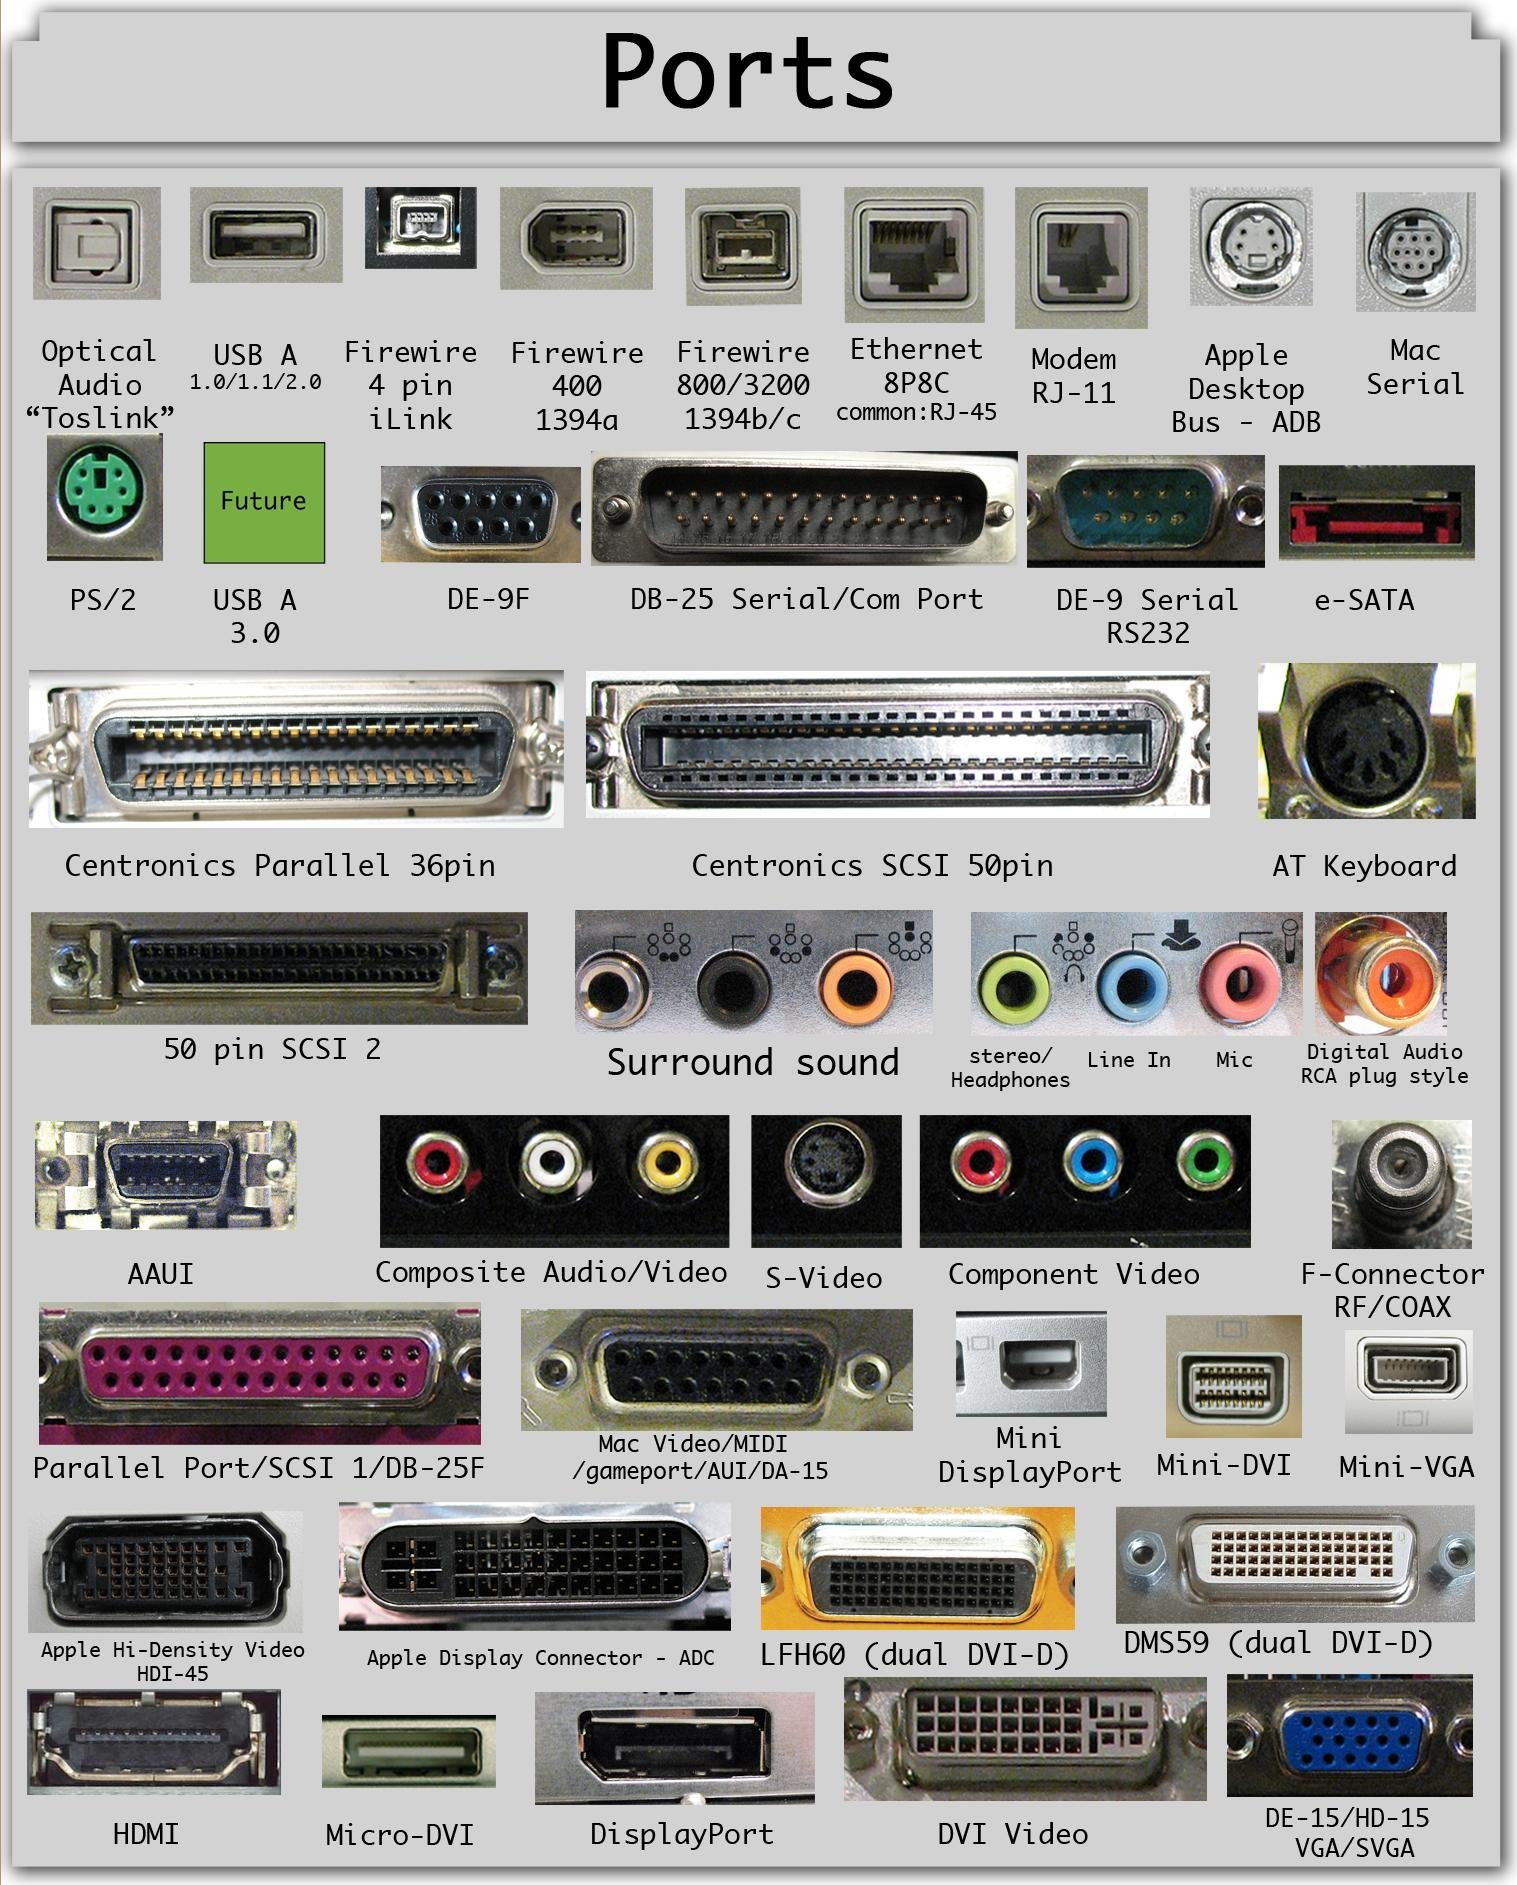 USB-C Laptop Port Symbols (Different Meanings)